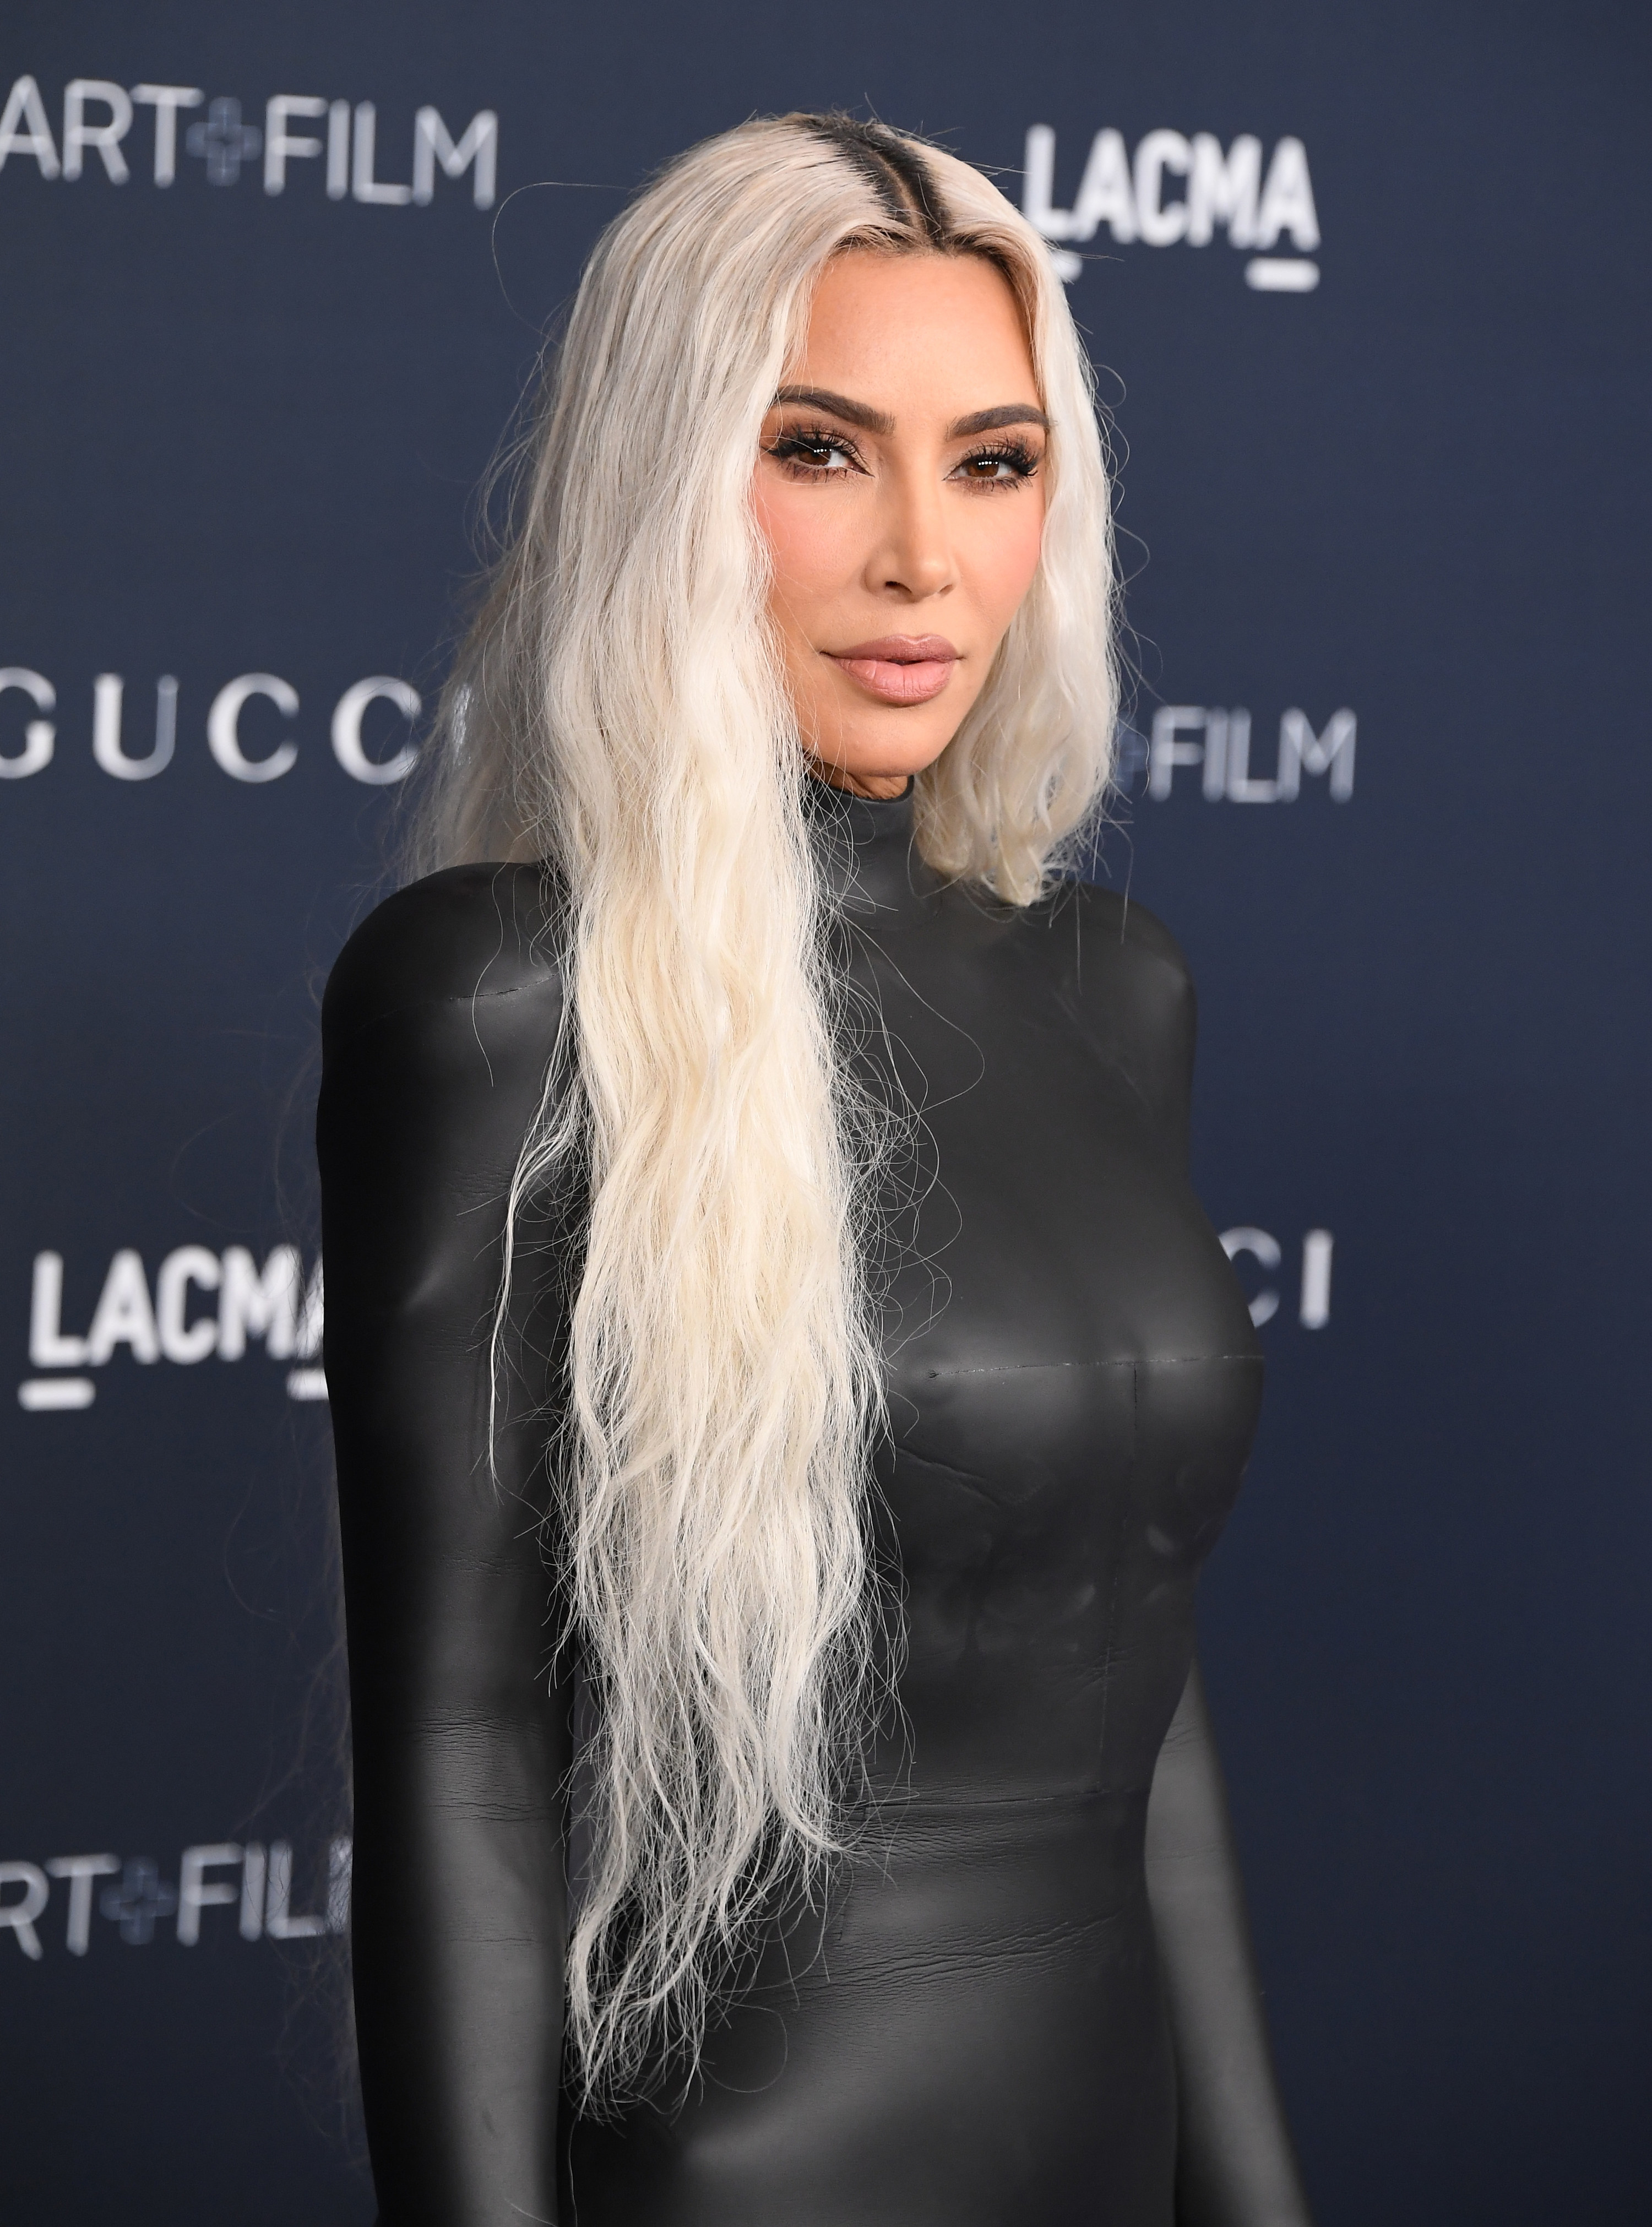 Kim Presented - This Is Why 2022 Was Kim Kardashian's Worst PR Year Yet